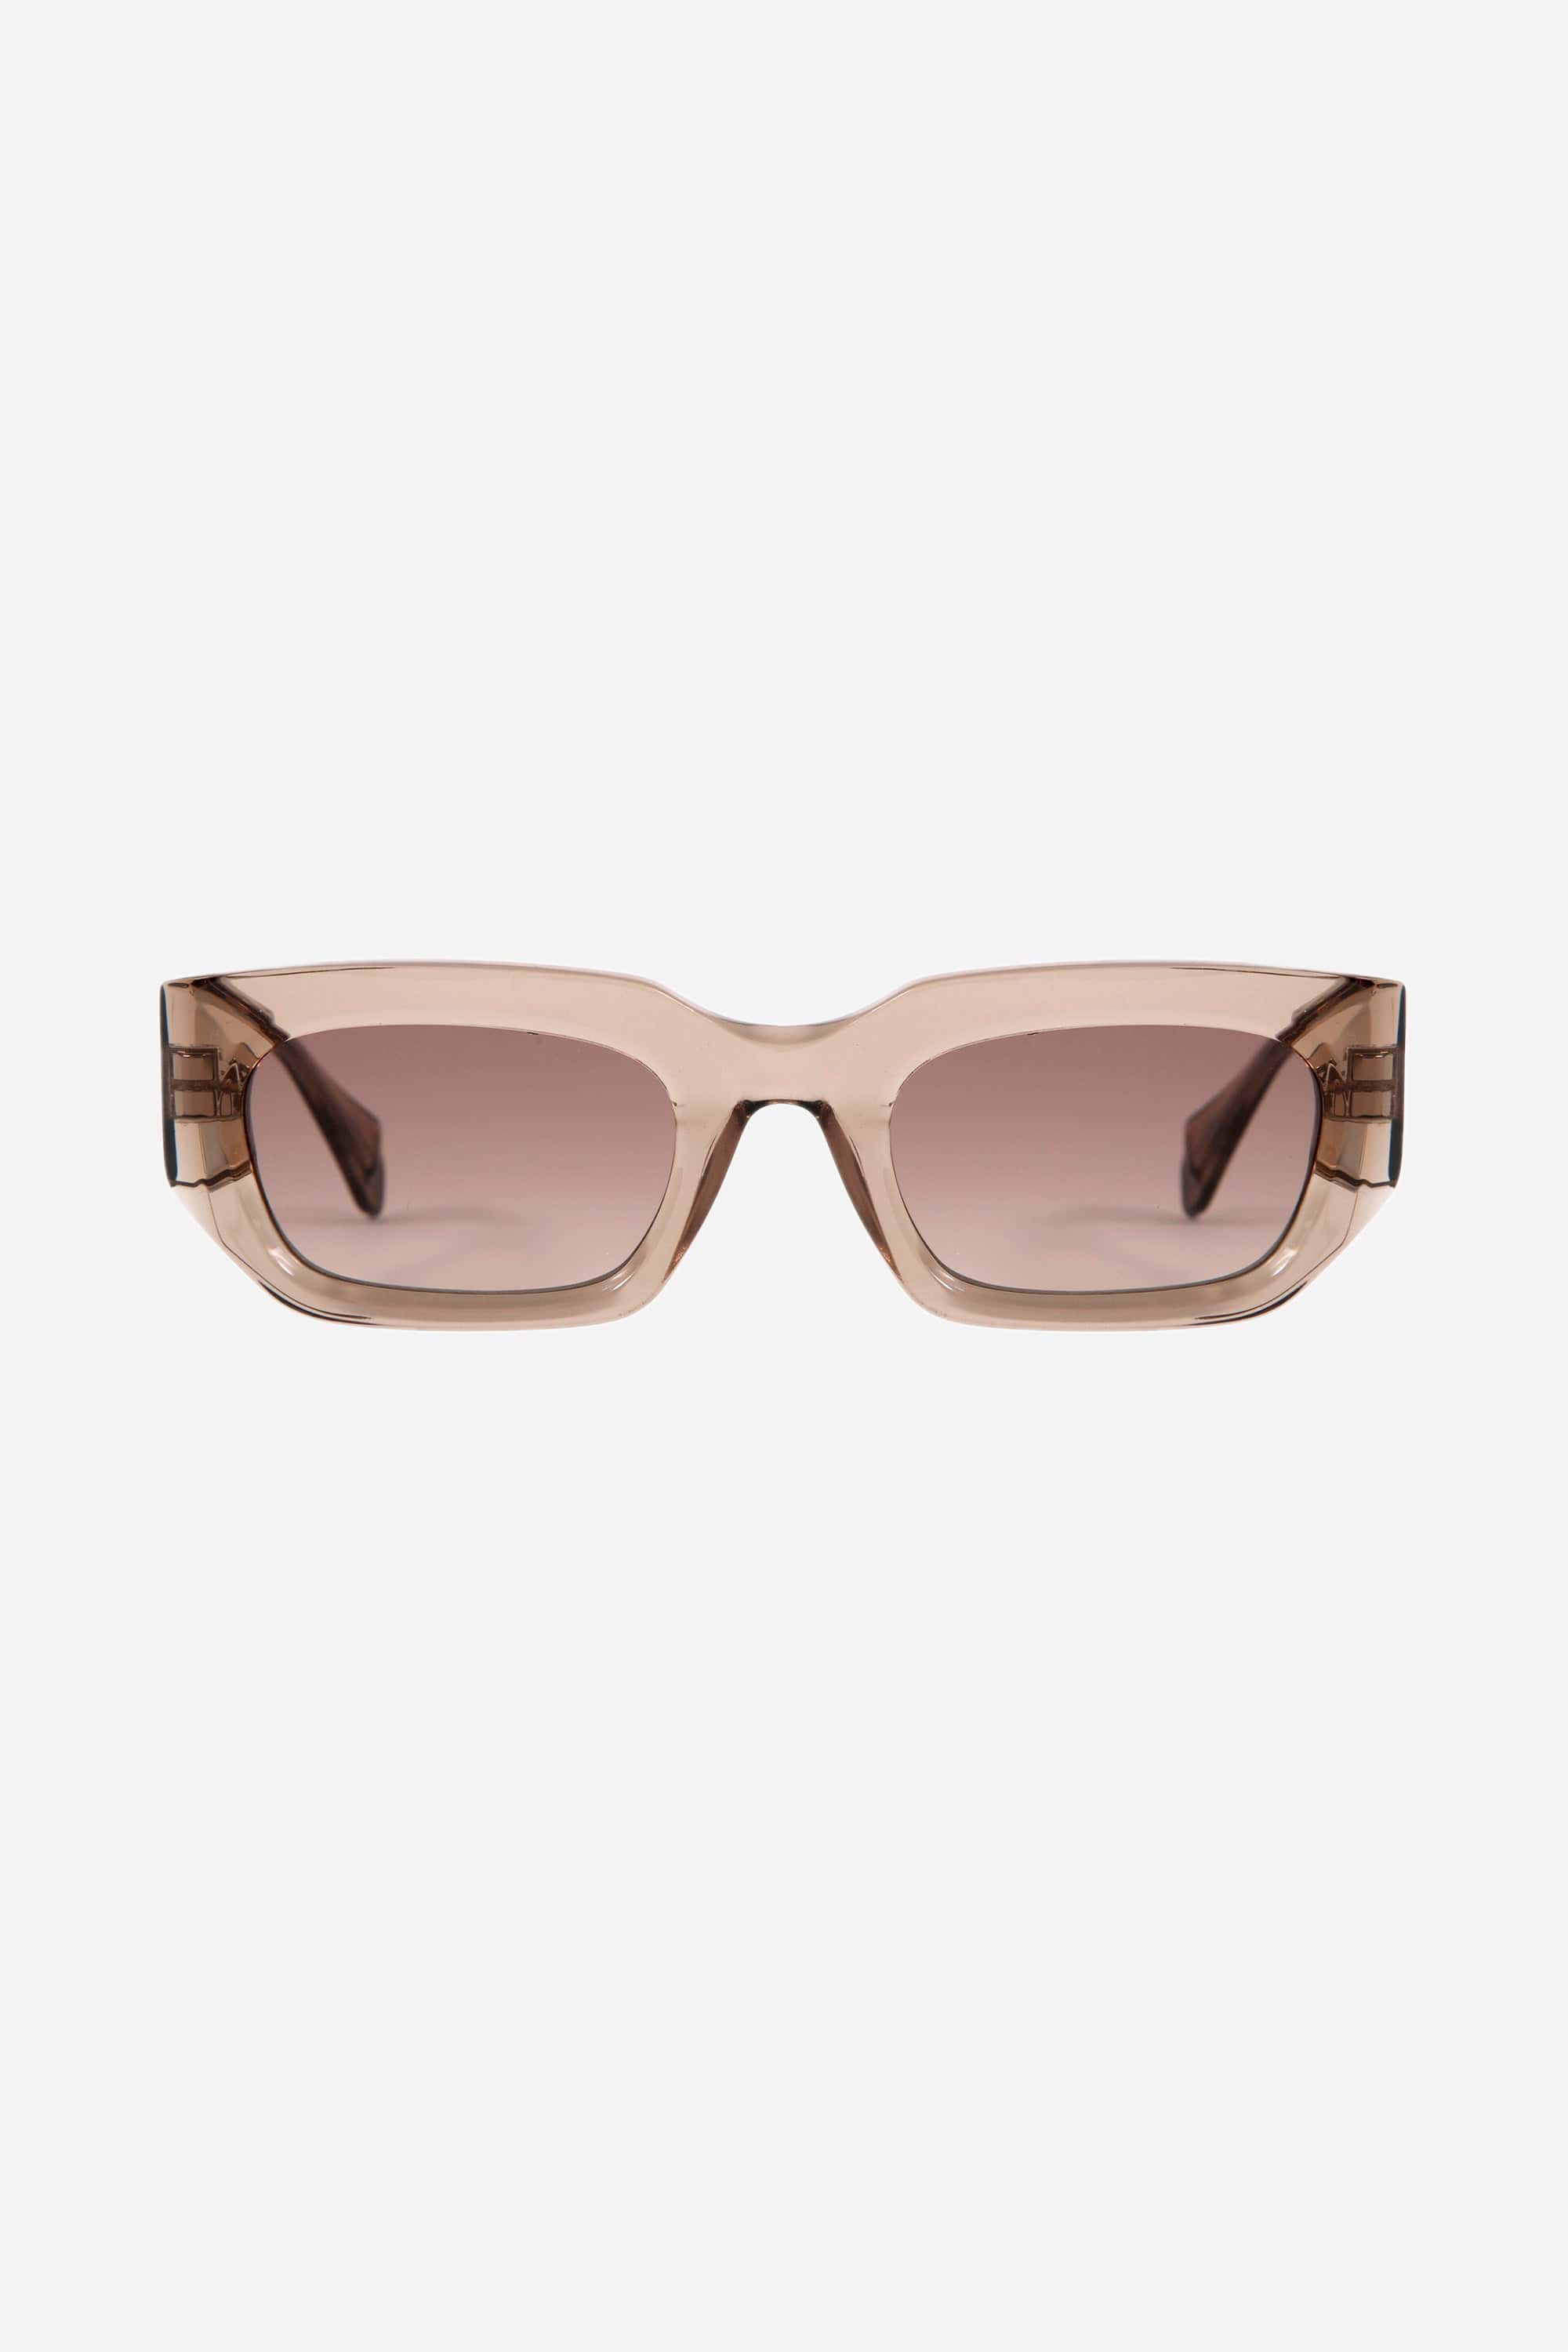 Gigi Studios micro nude sunglasses - Eyewear Club